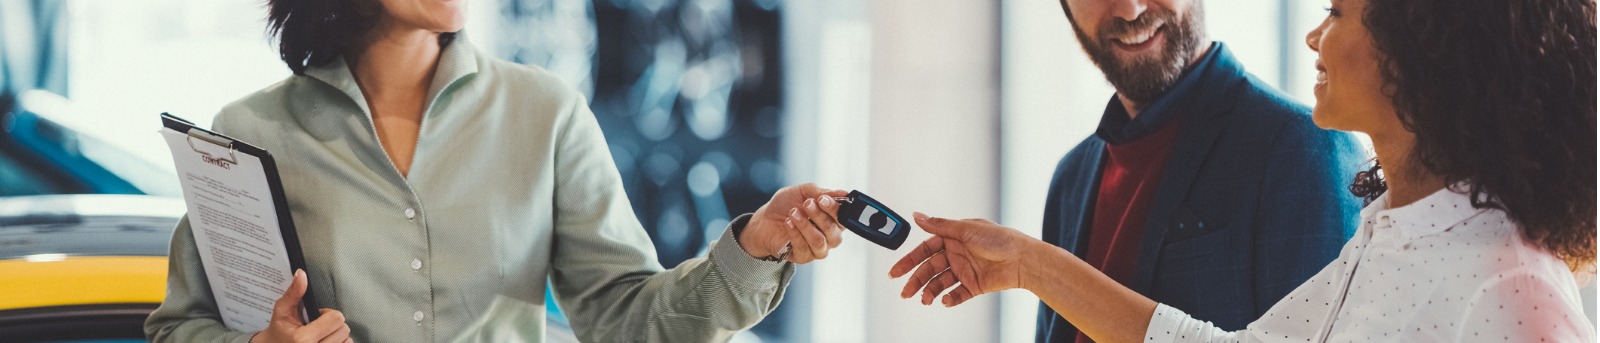 Man and woman receiving brand new car keys